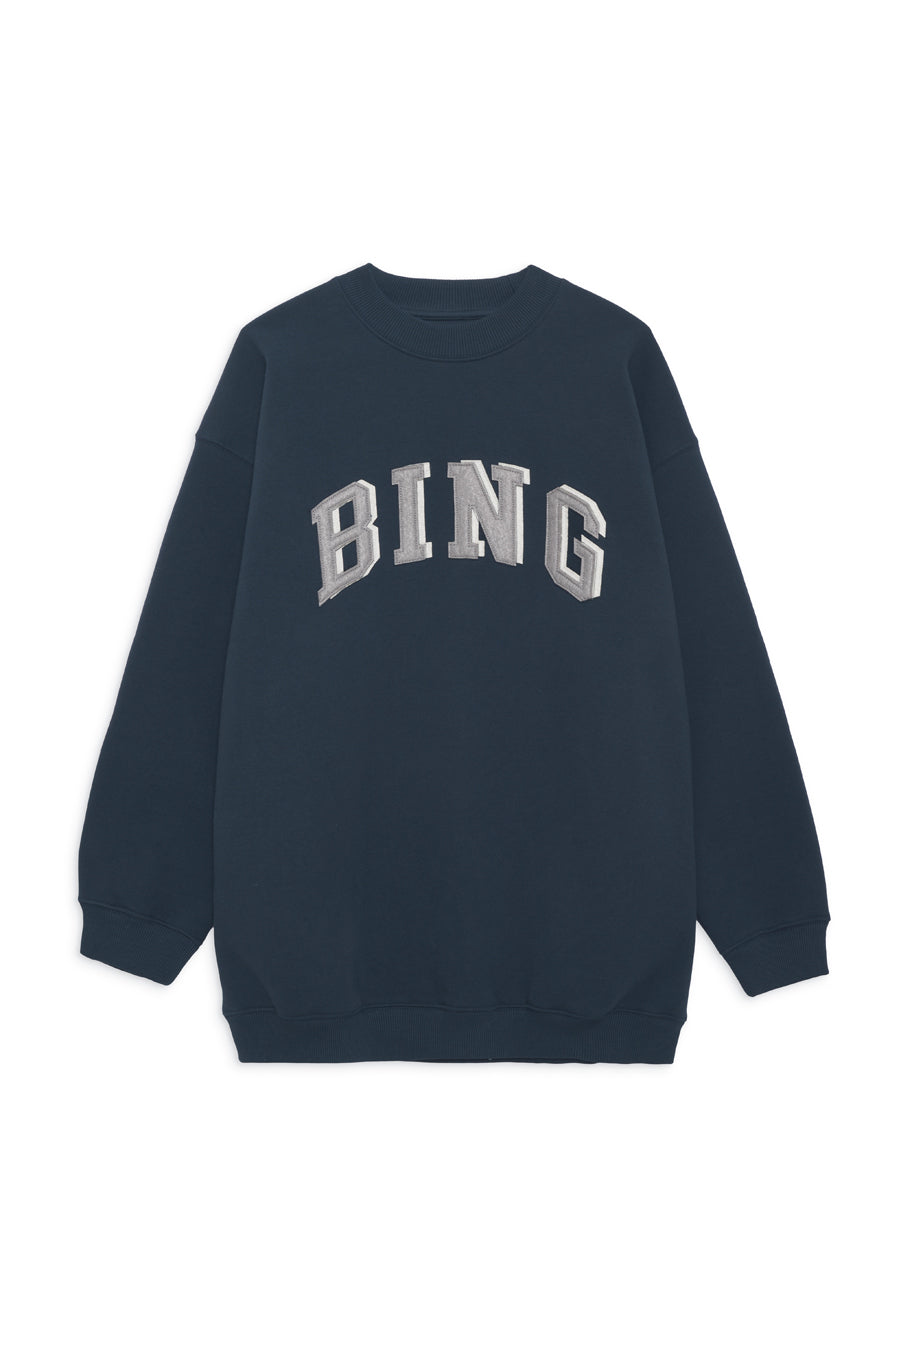 Anine Bing - Tyler Sweatshirt Bing in Navy